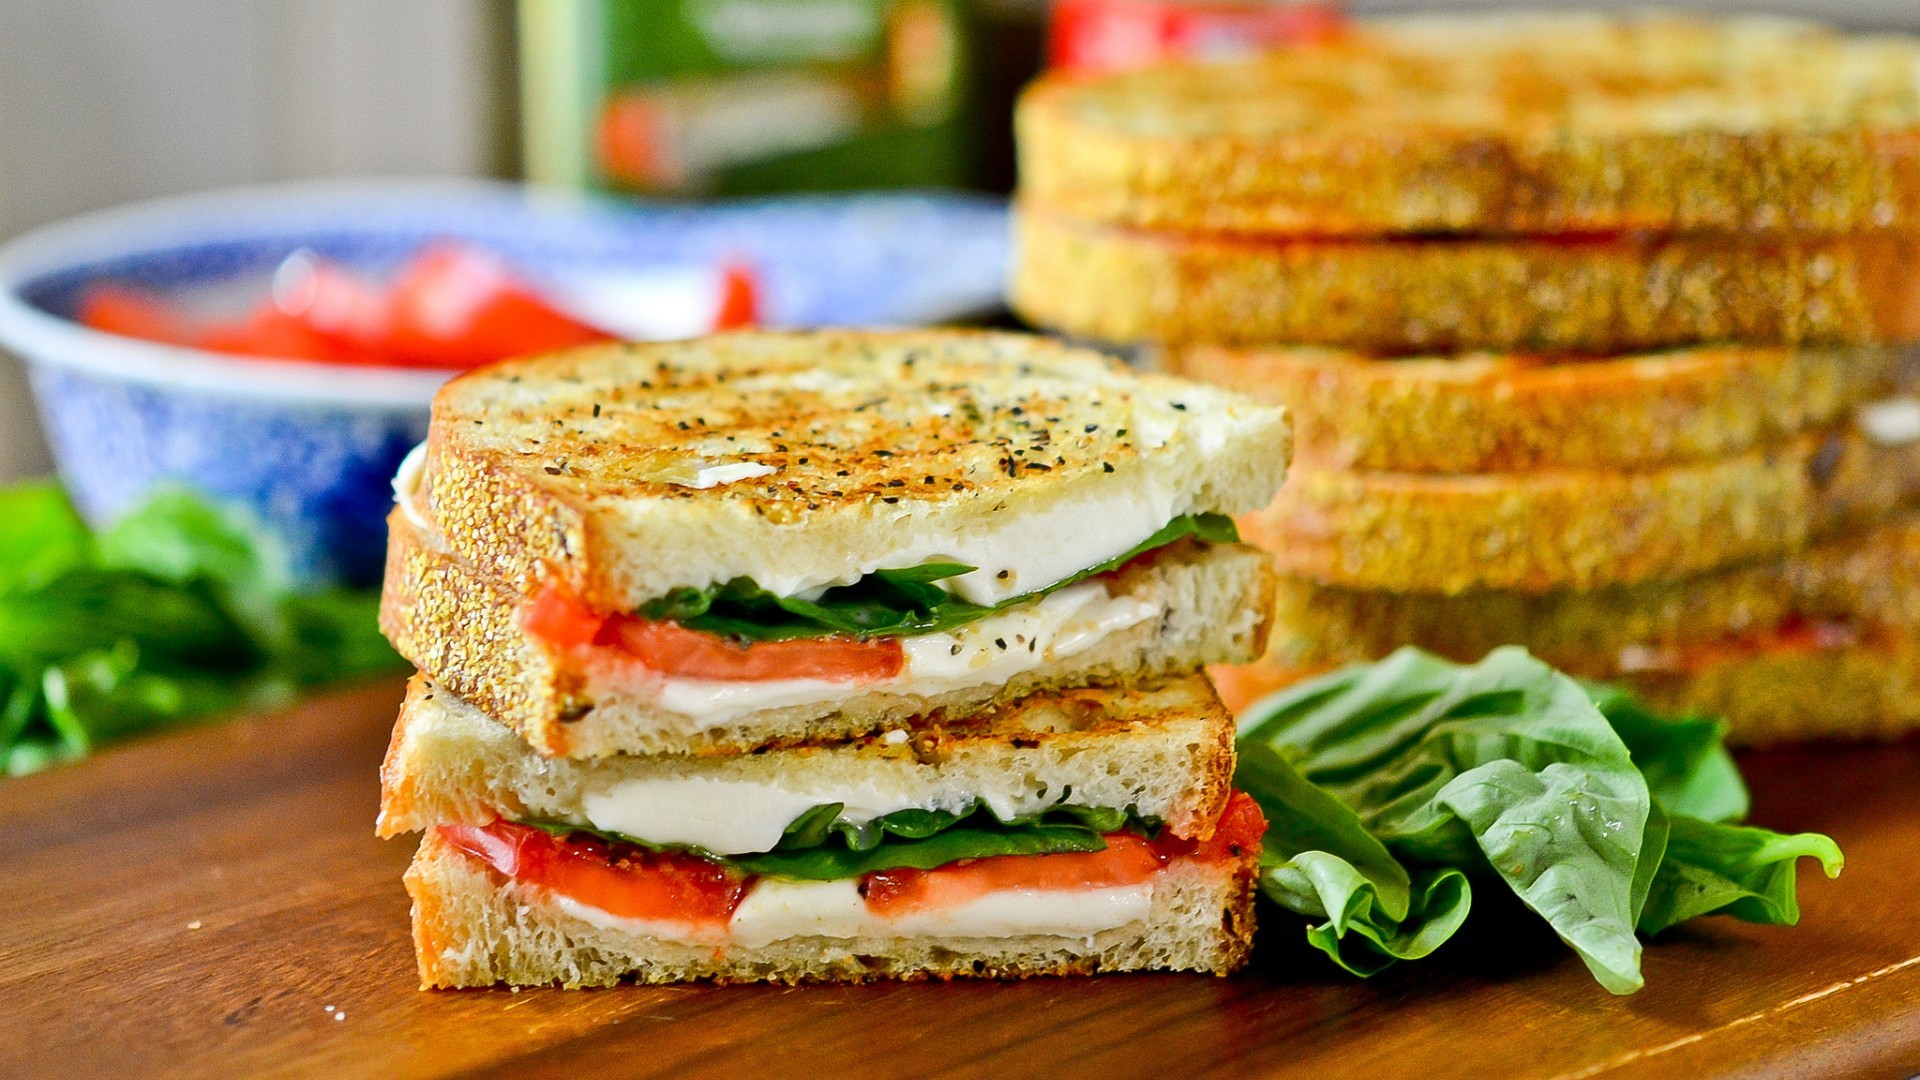 Food Sandwiches Blurred 1920x1080